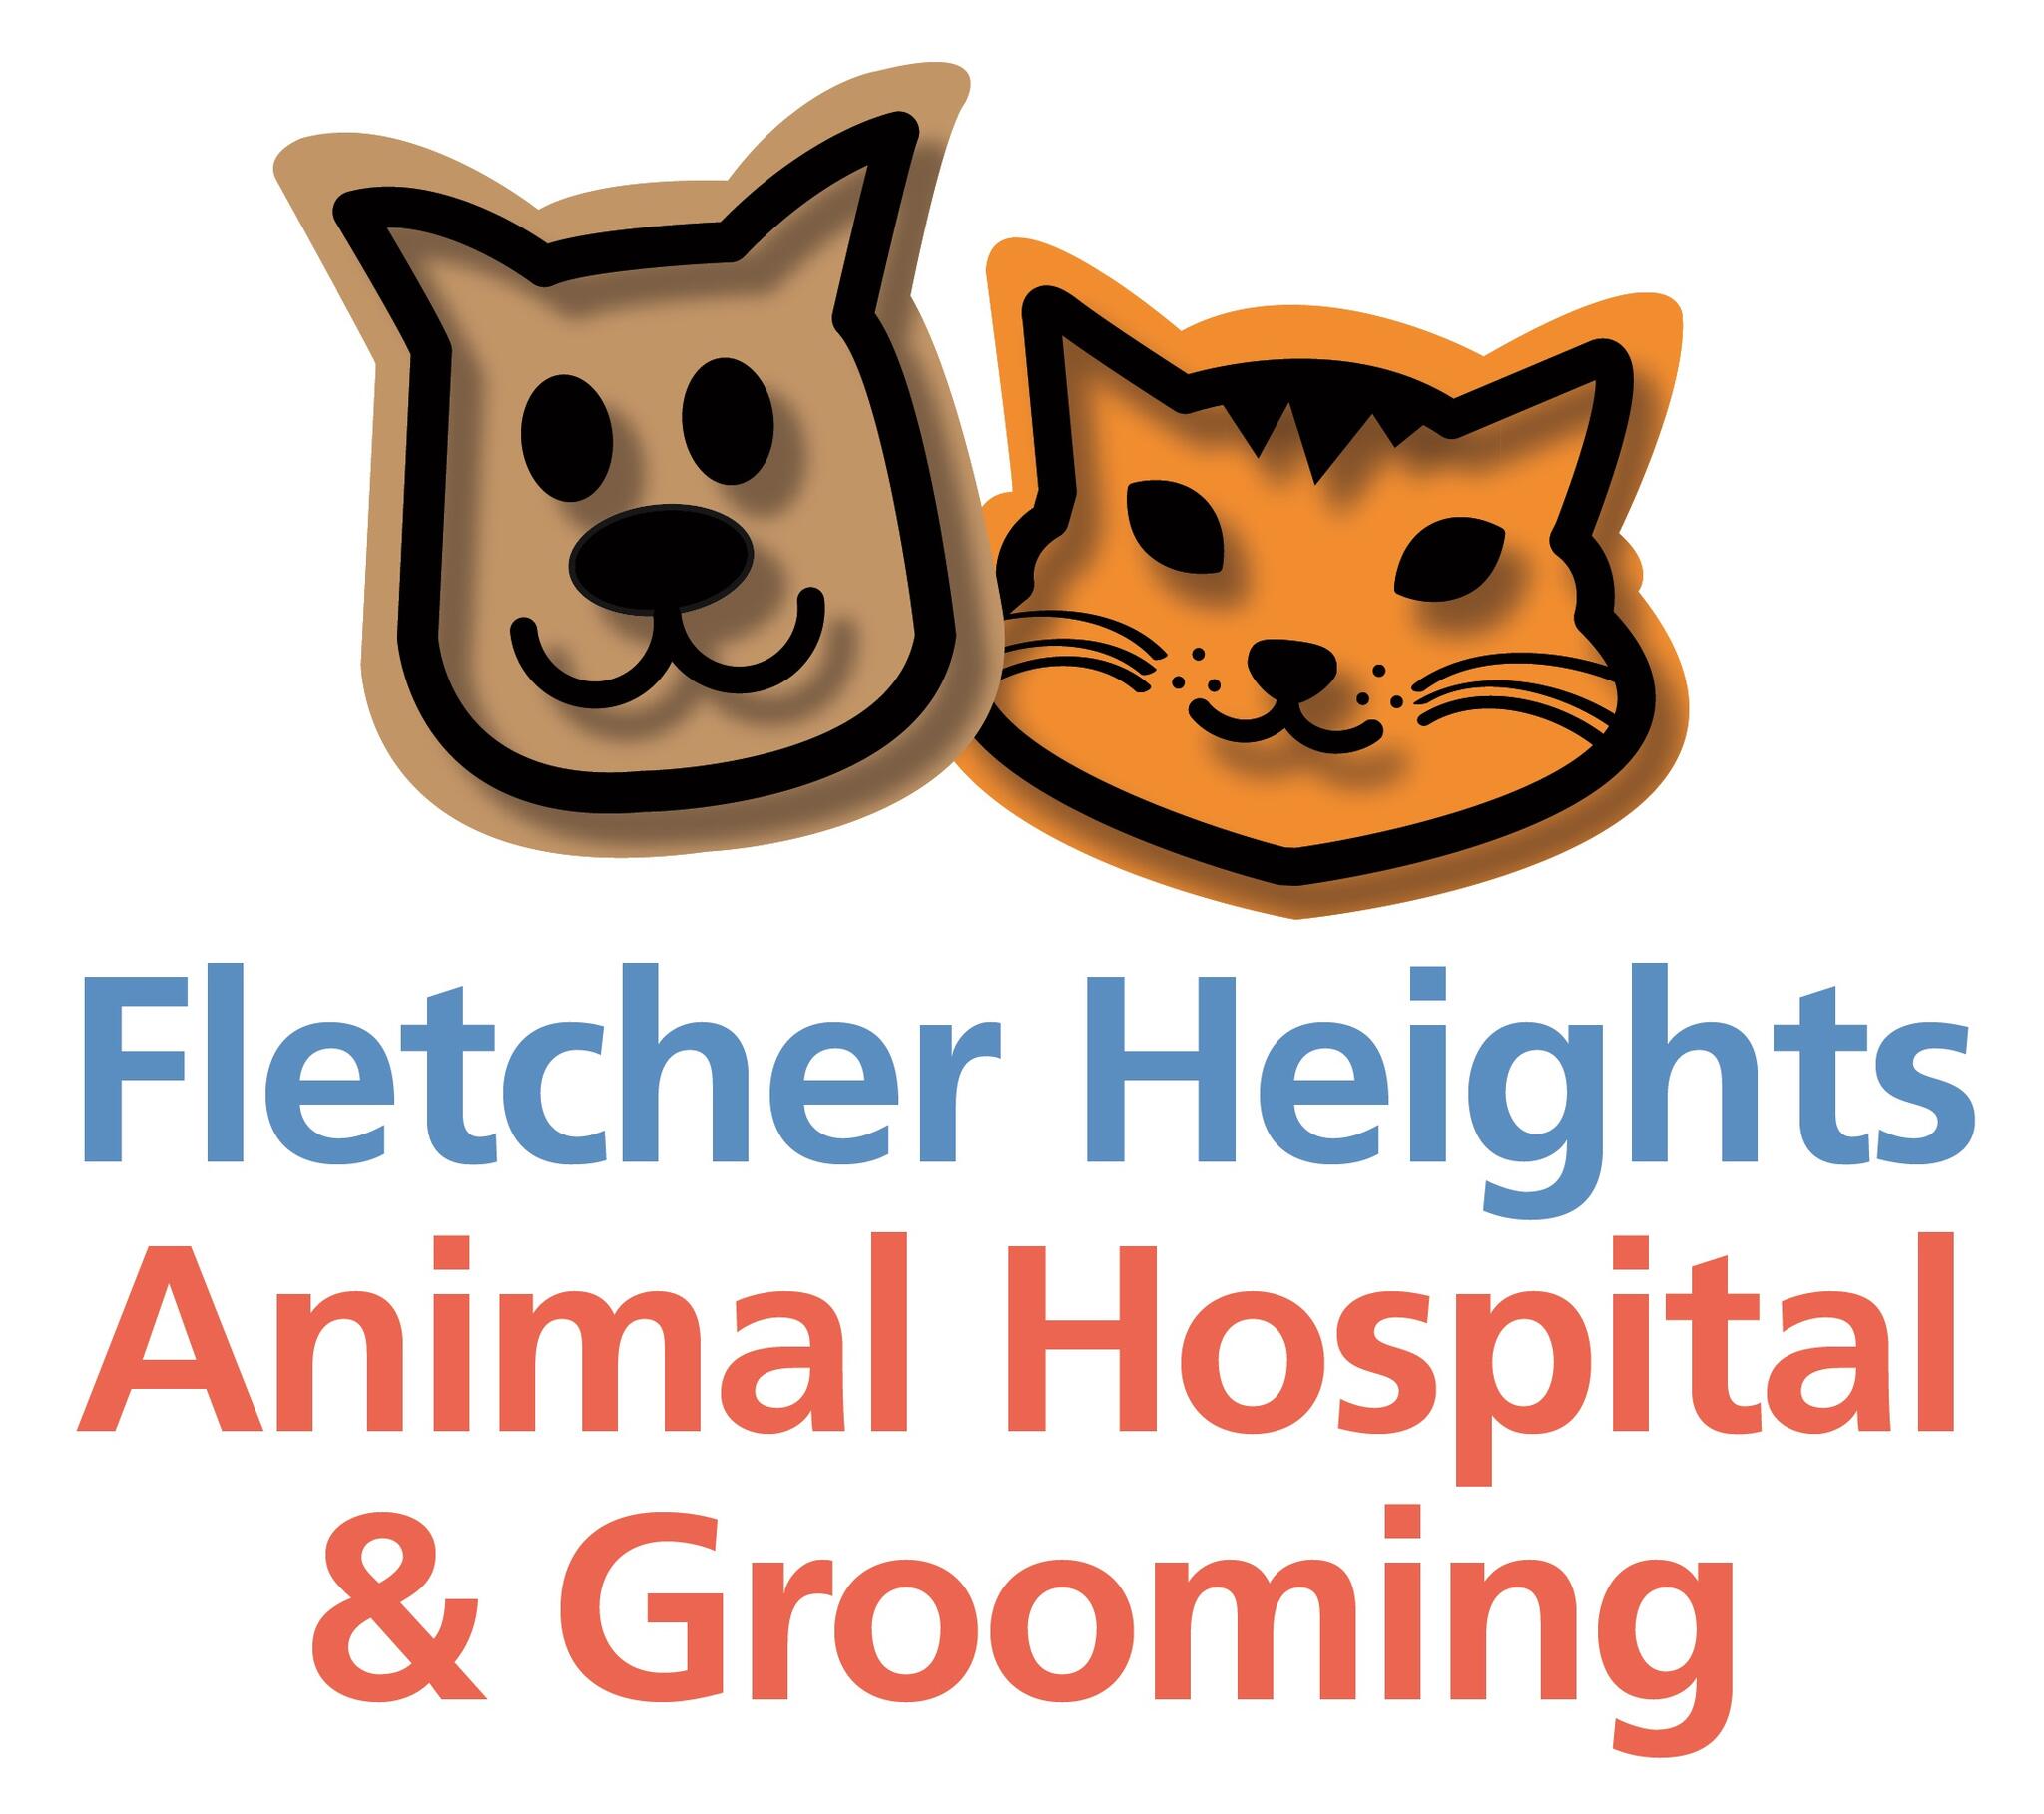 Fletcher Heights Animal Hospital & Grooming - Peoria, AZ